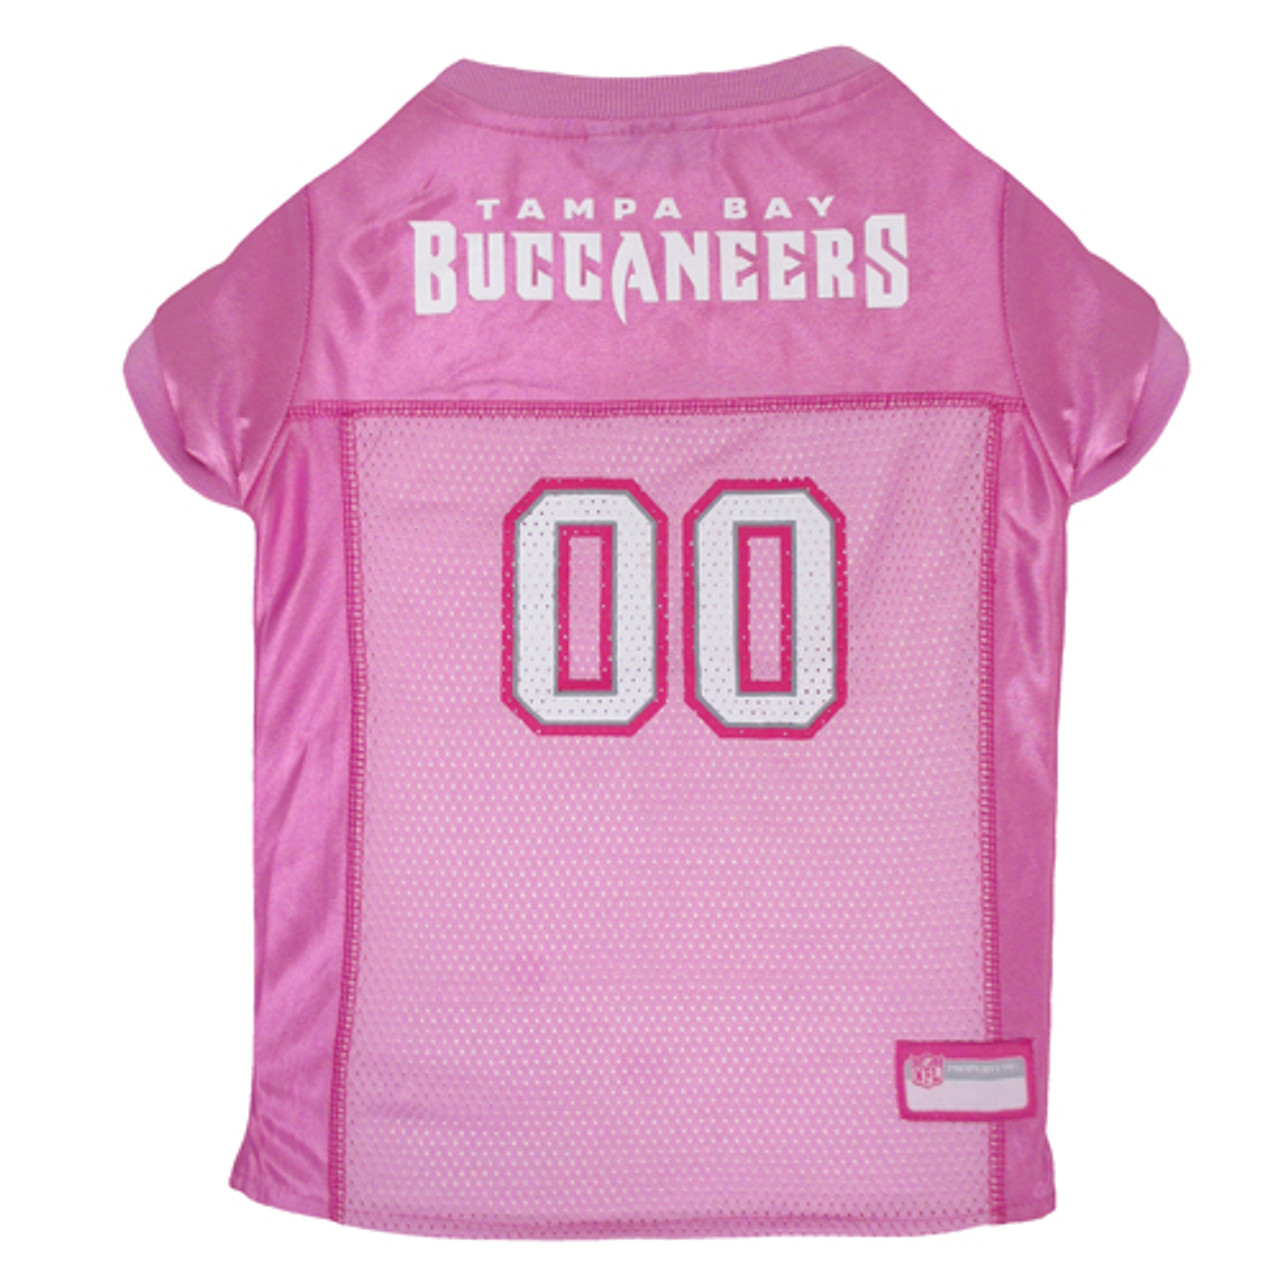  Tom Brady Tampa Bay Buccaneers #12 Youth Girls Sizes 7